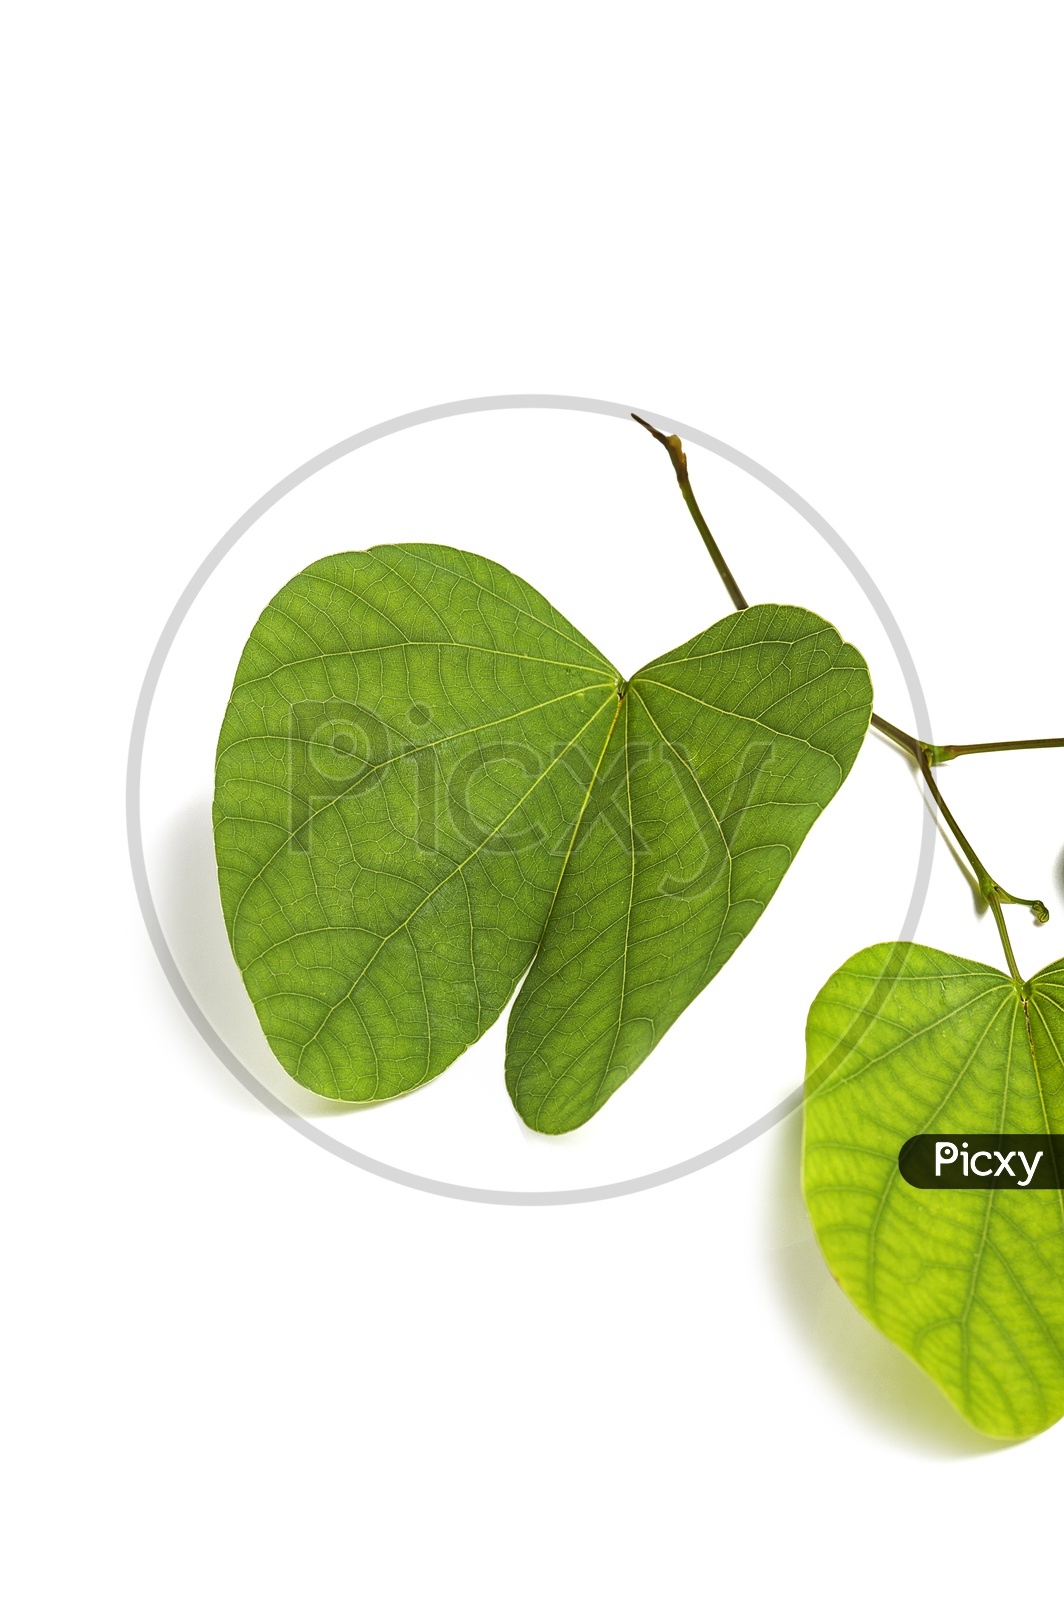 Bauhinia racemosa leaves on White background